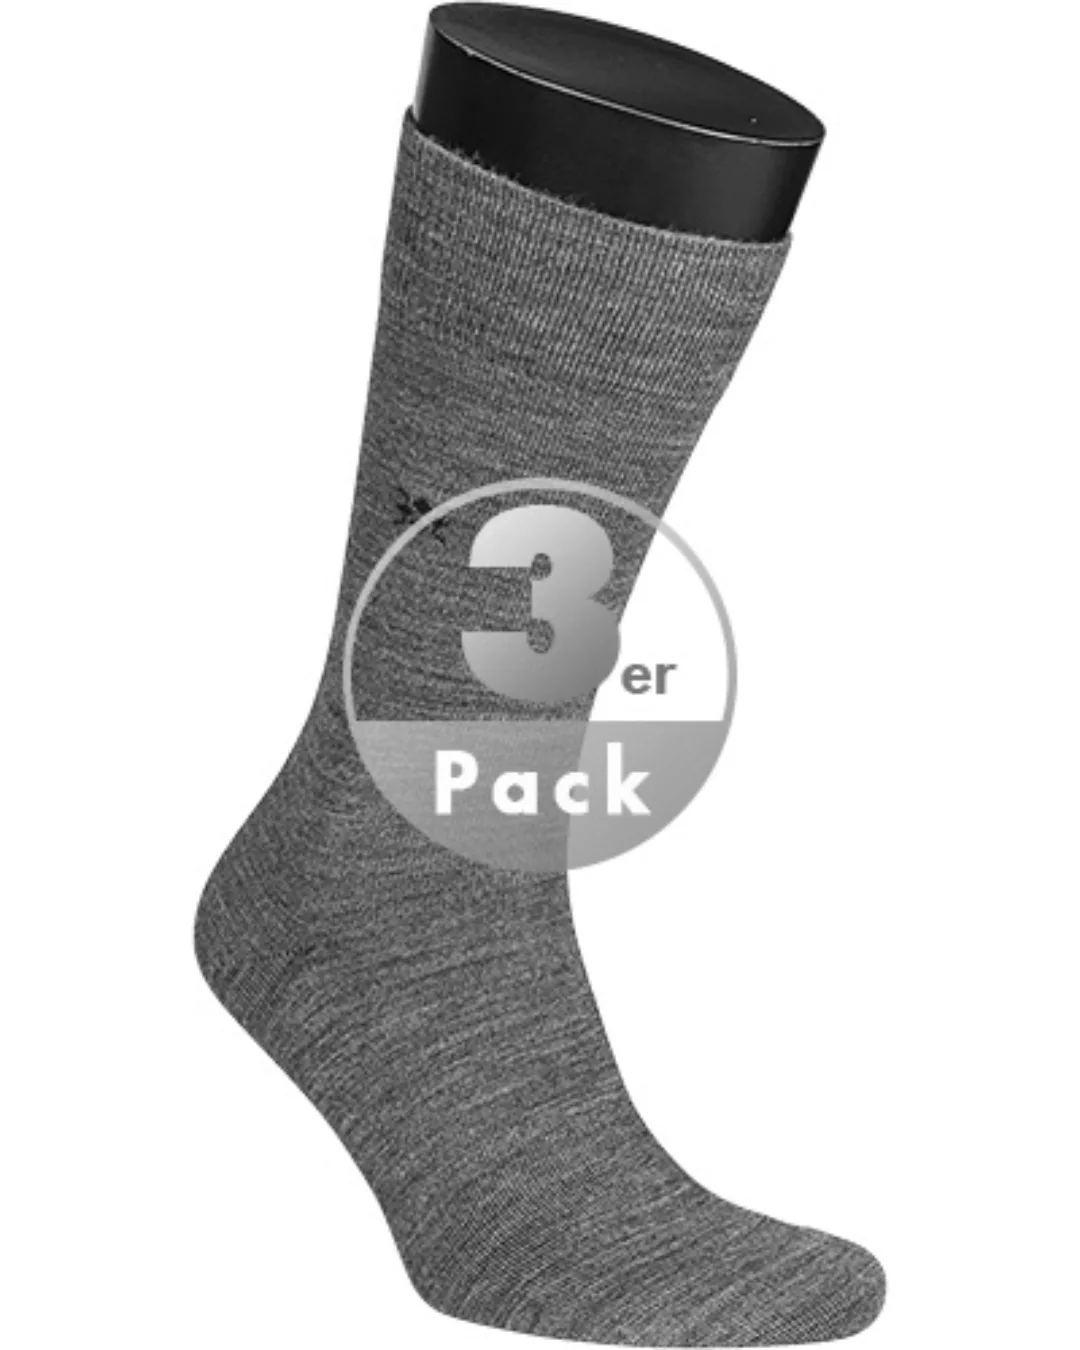 Burlington Socken Leeds 3er Pack 21007/3070 günstig online kaufen